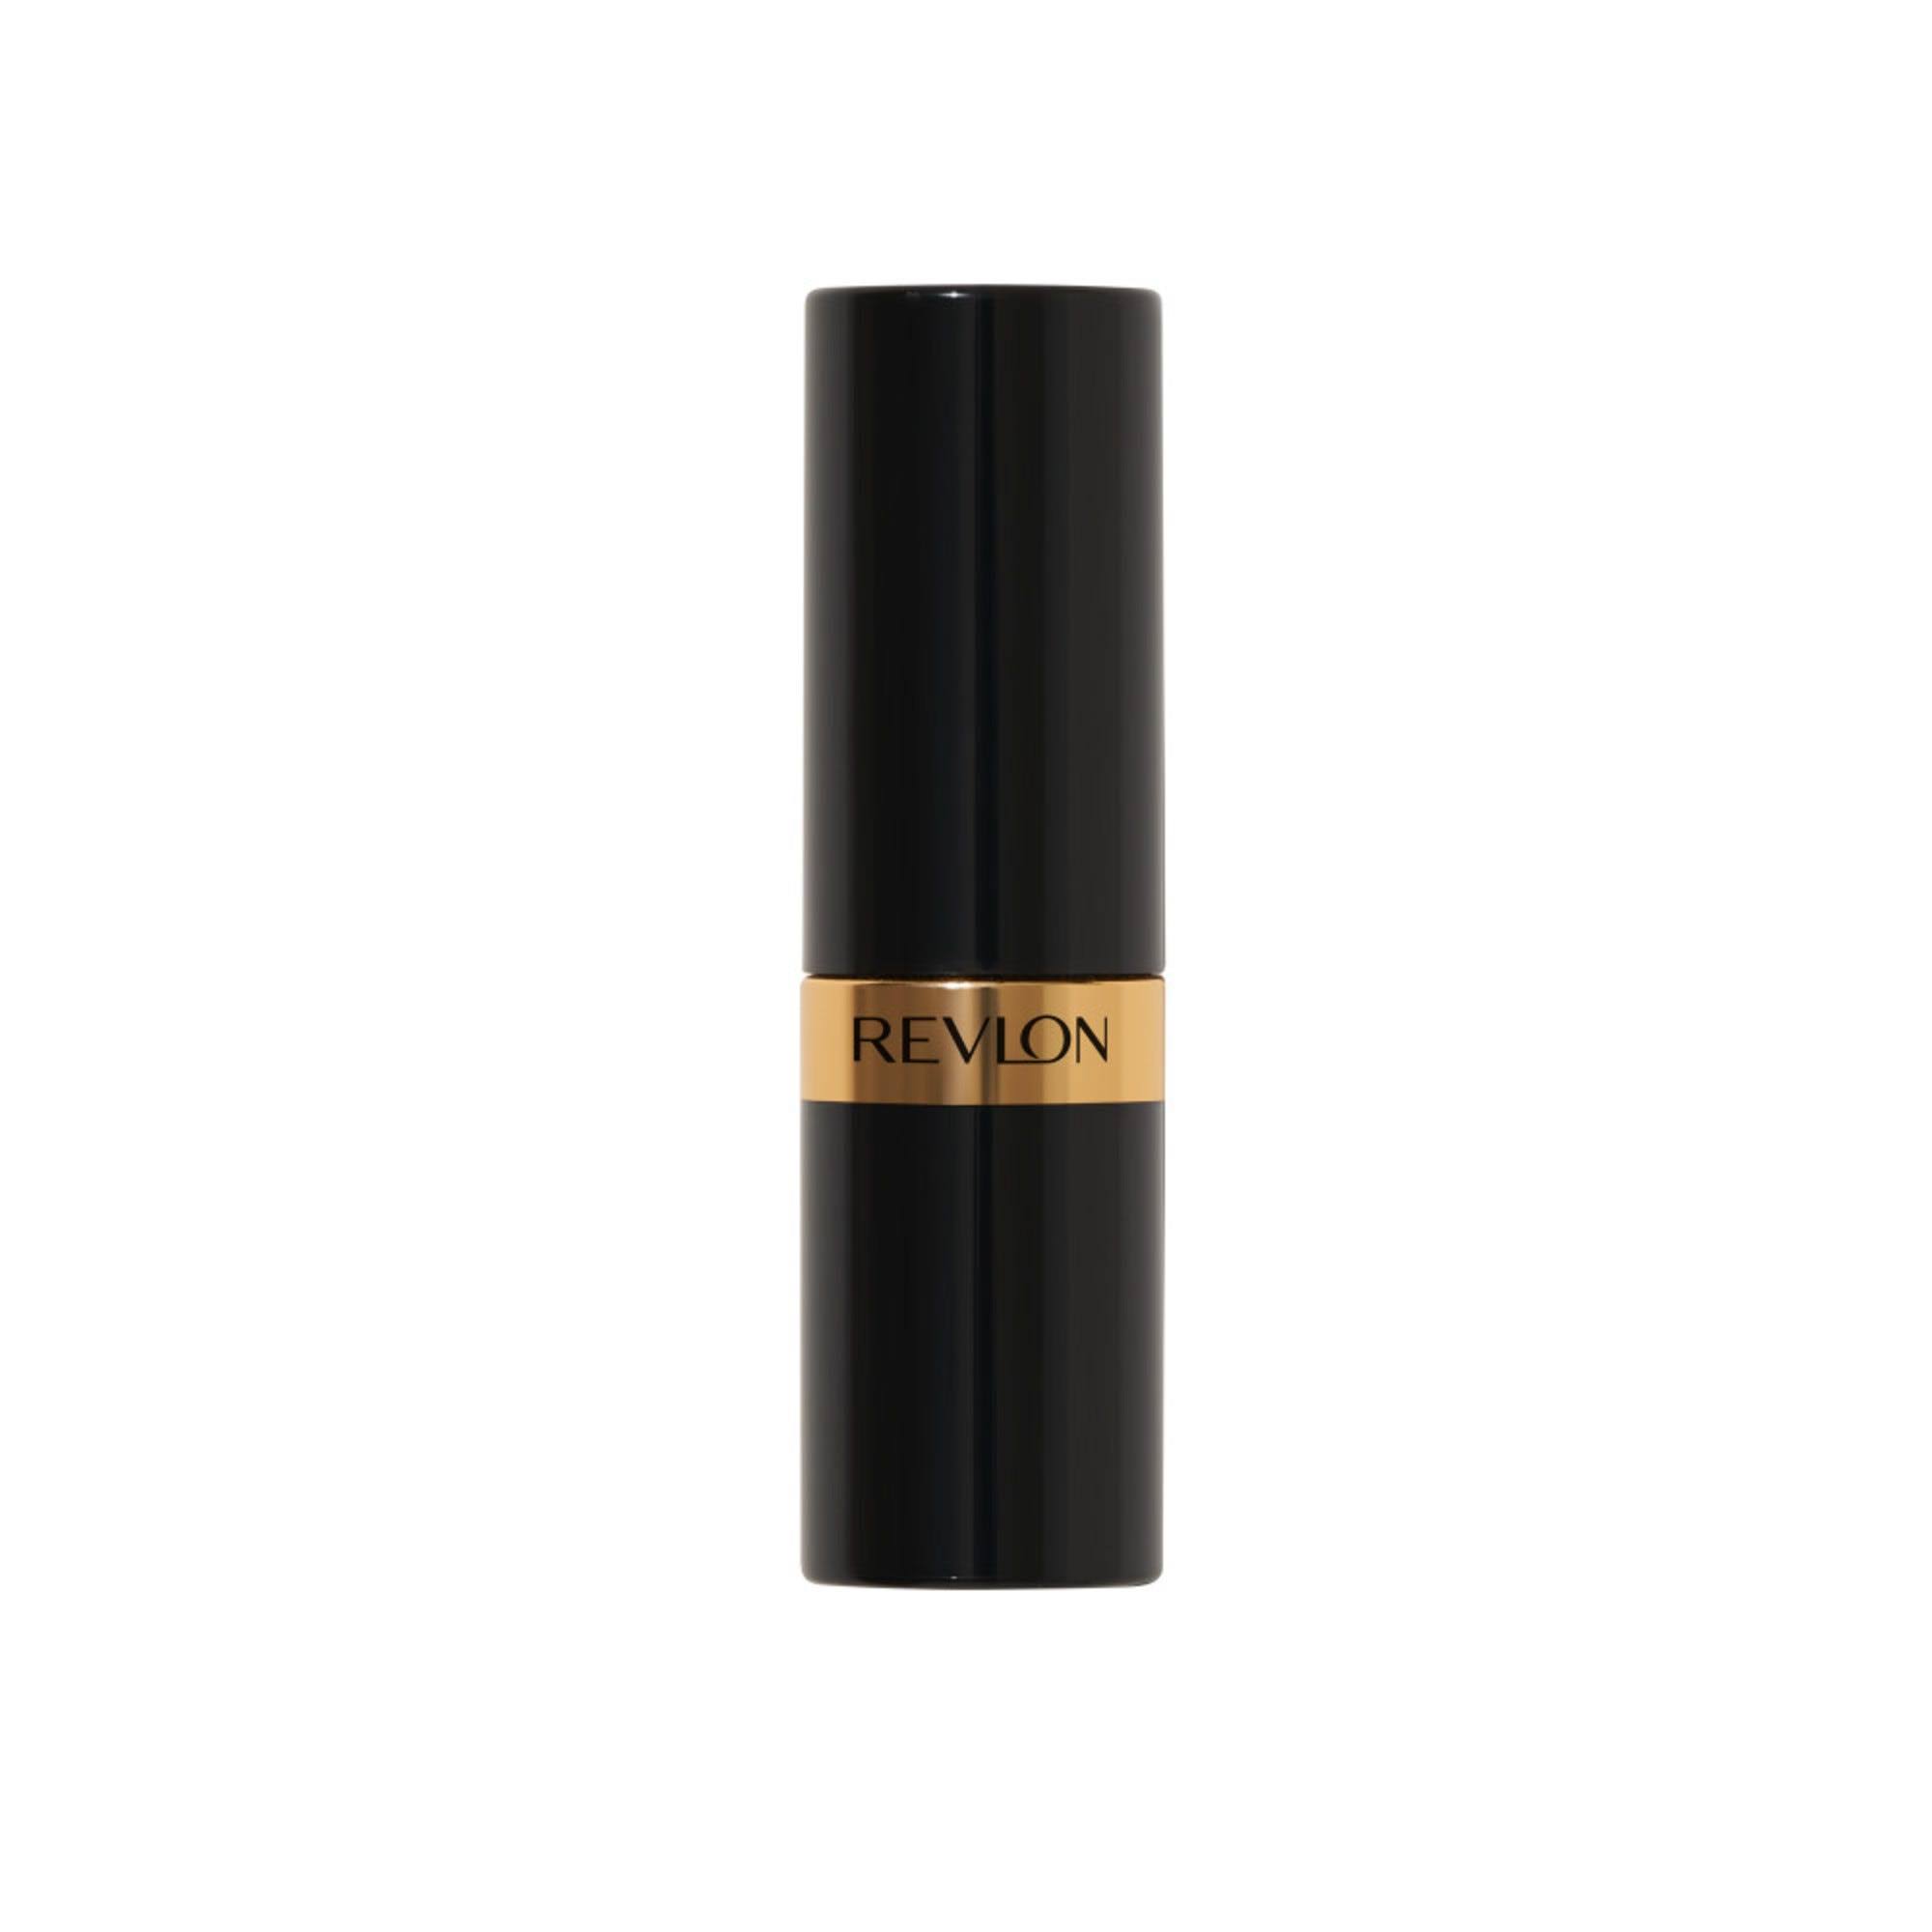 Revlon Super Lustrous Lipstick - Coffee Bean, 0.15oz